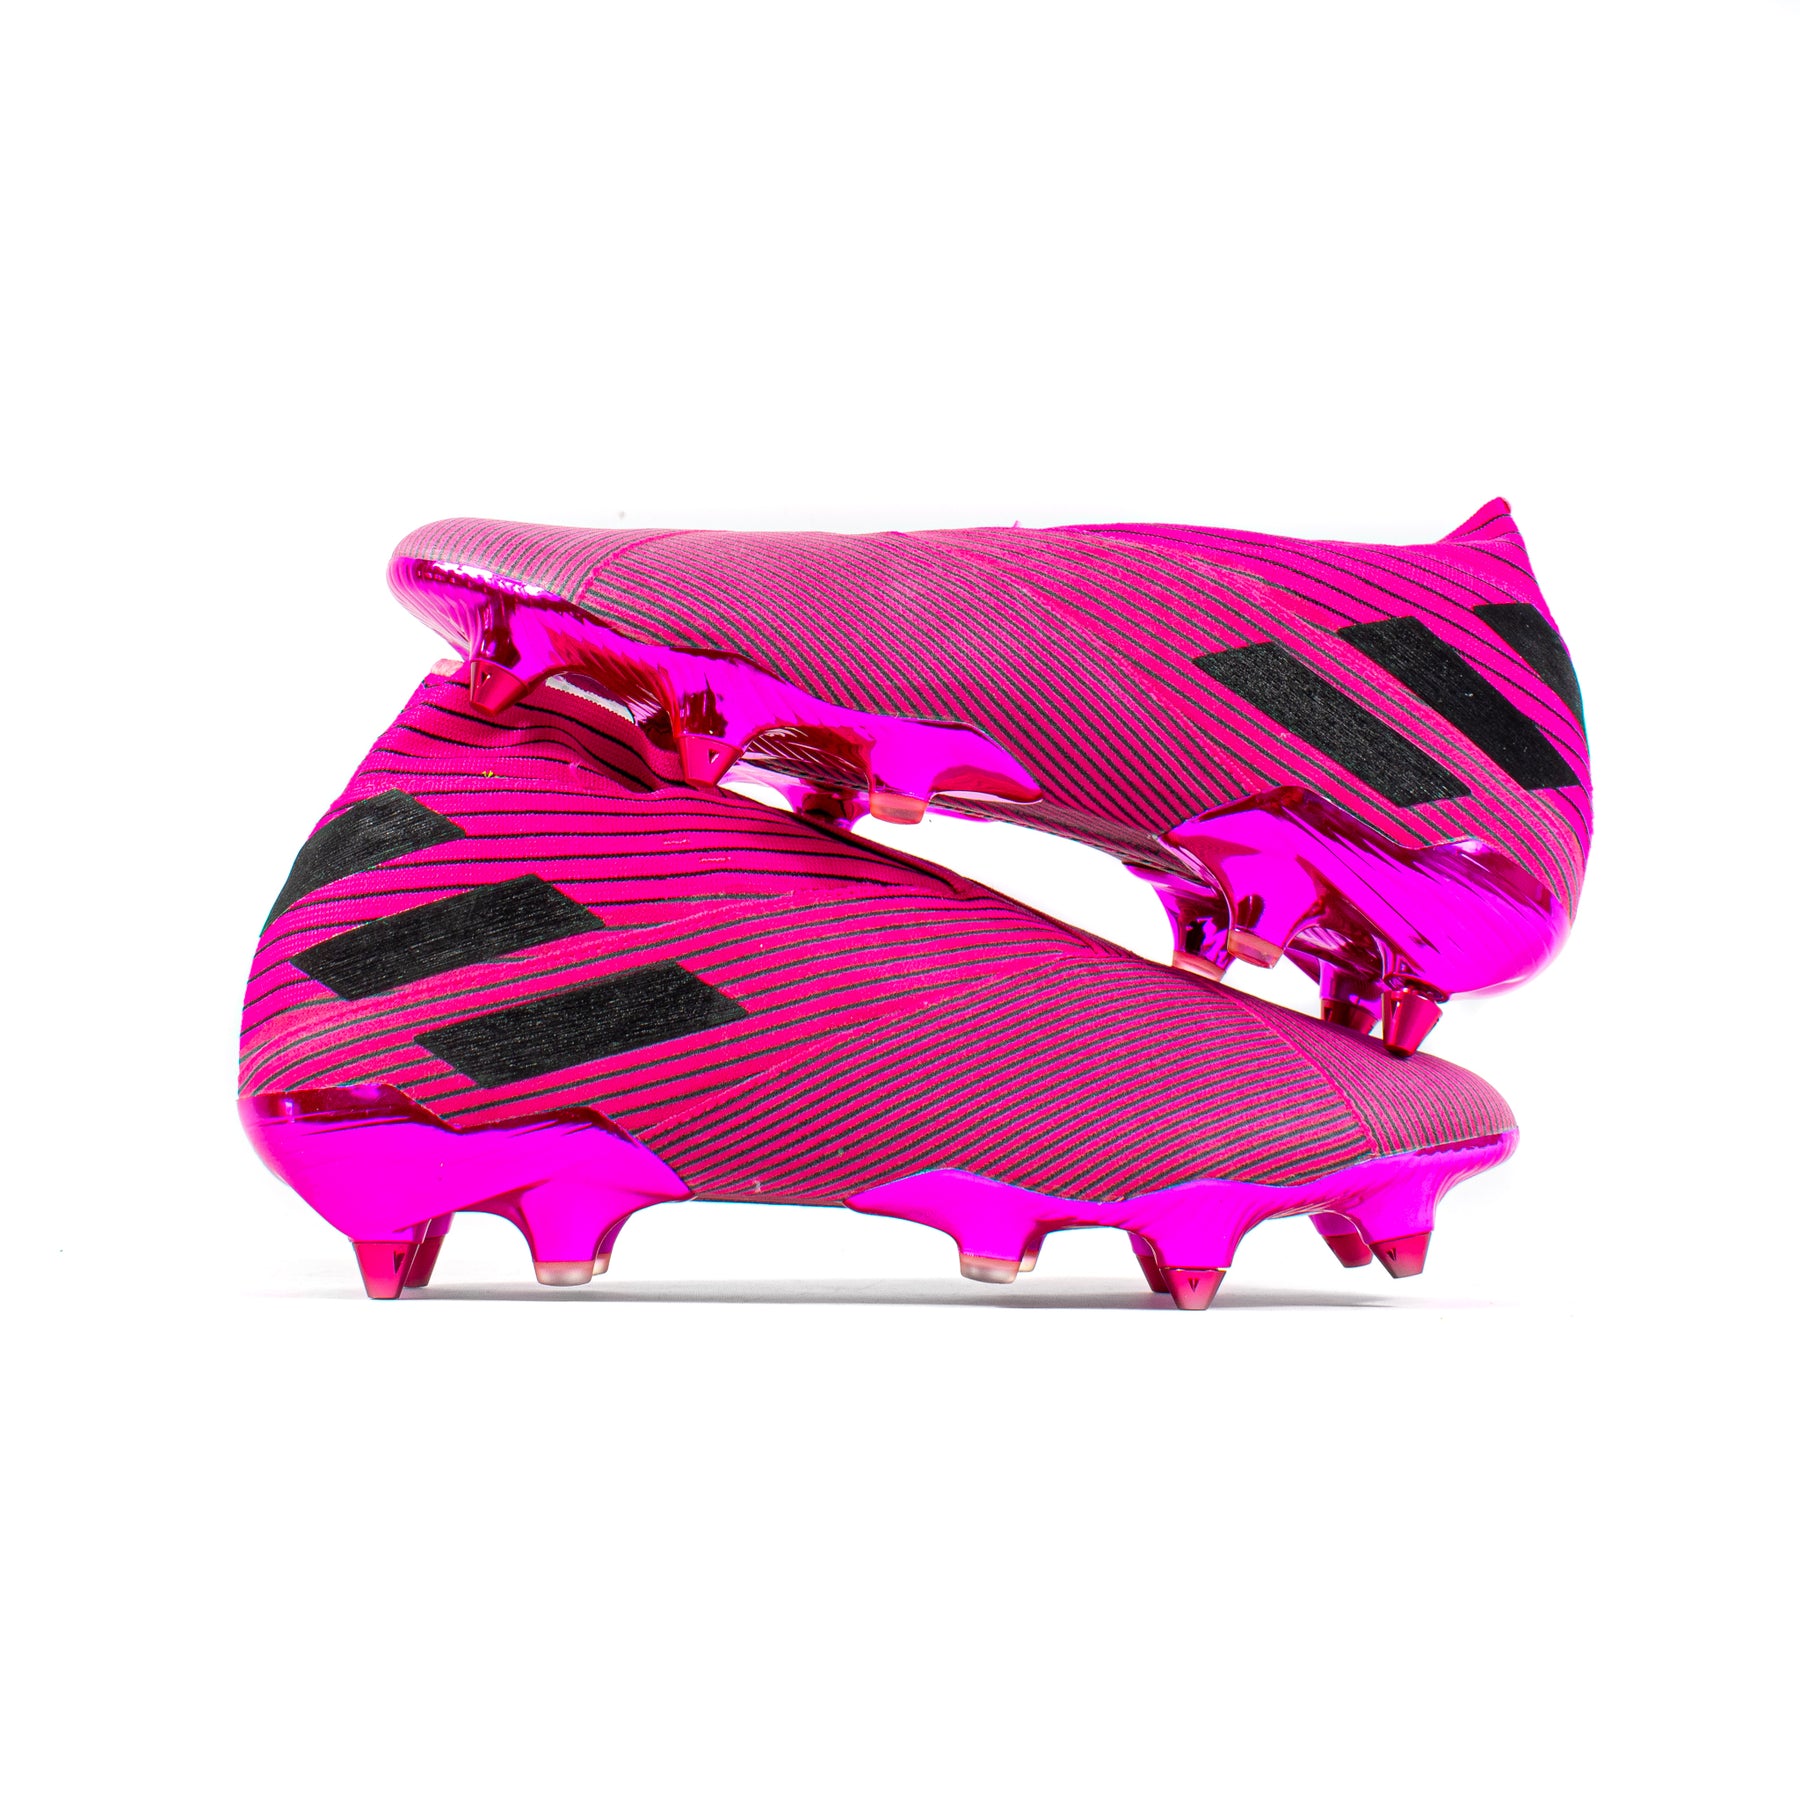 Adidas Nemeziz 19+ Pink SG Pro – Classic Soccer Cleats